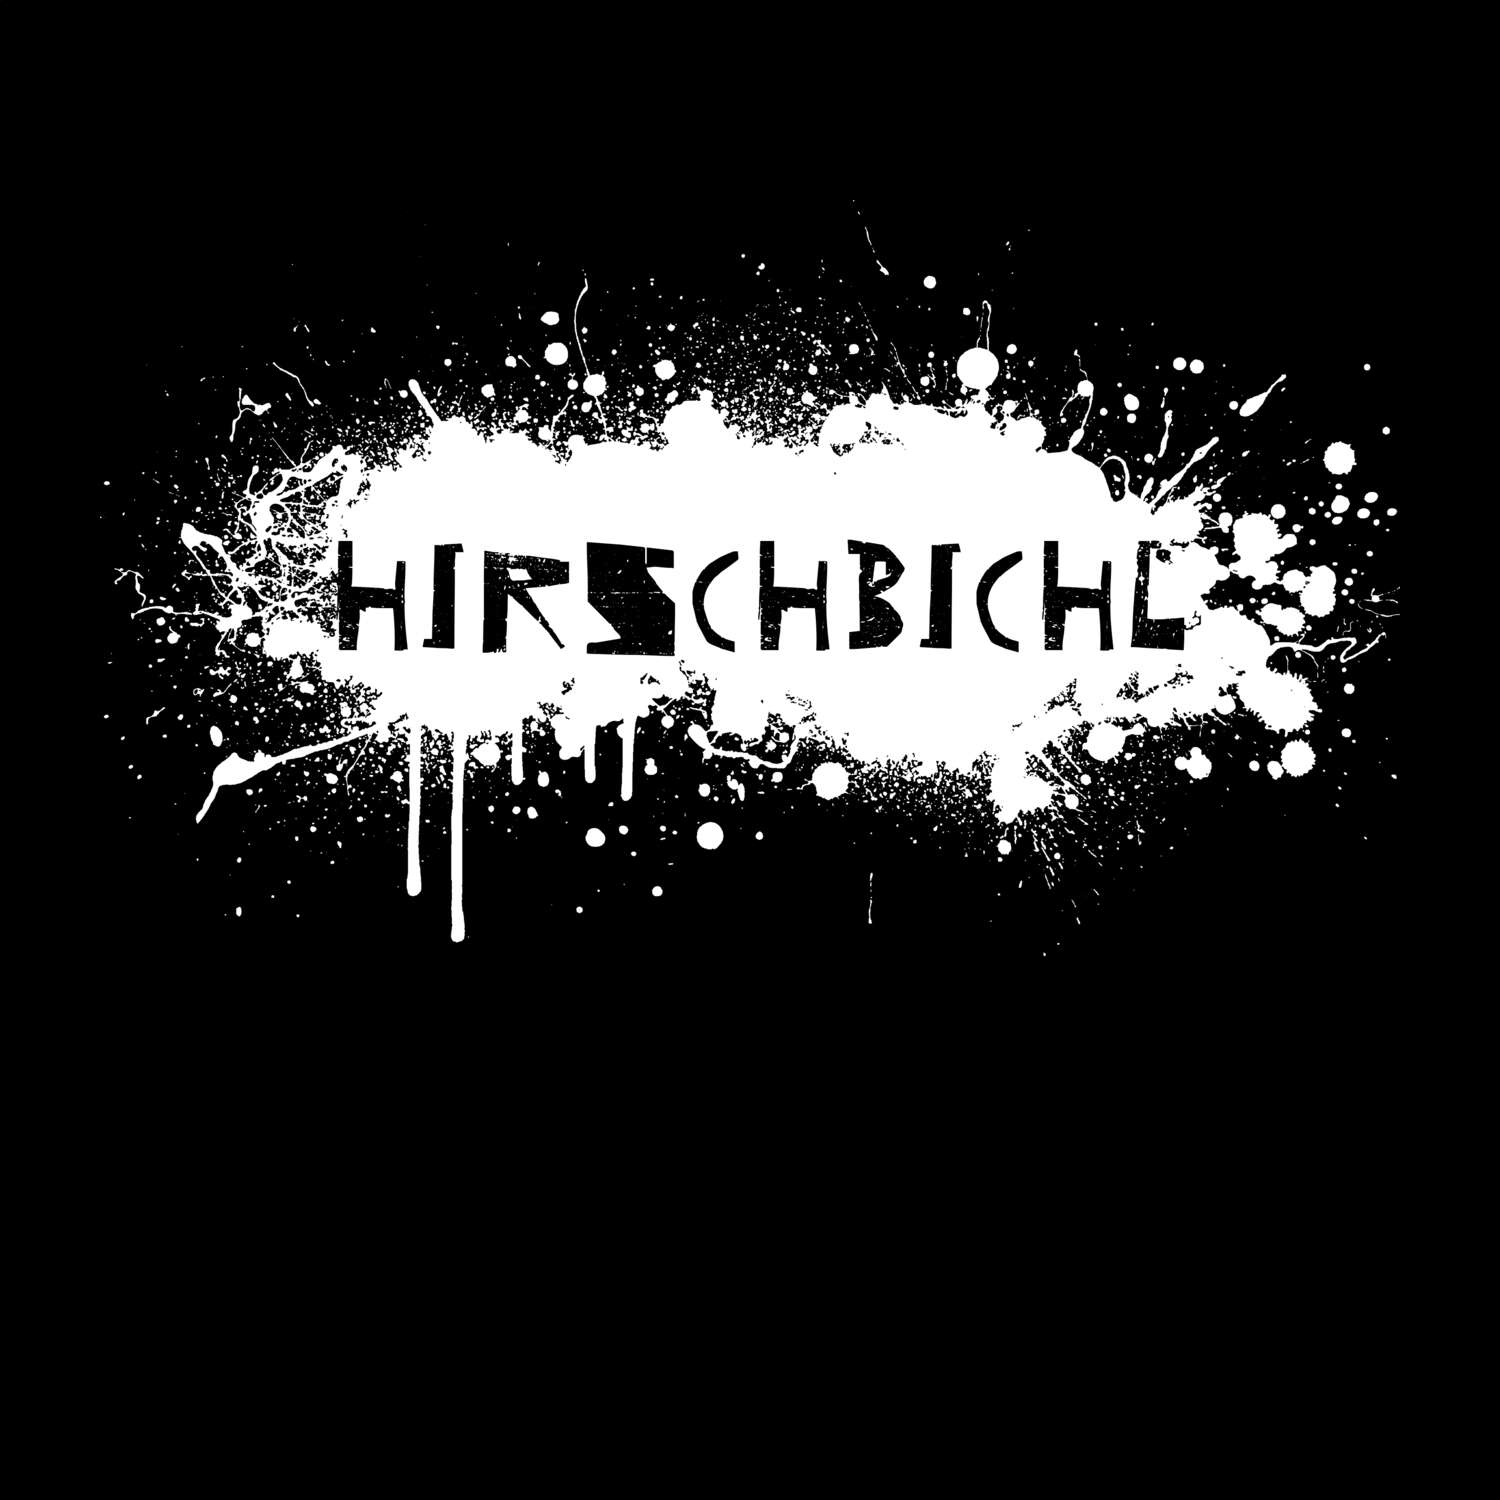 Hirschbichl T-Shirt »Paint Splash Punk«